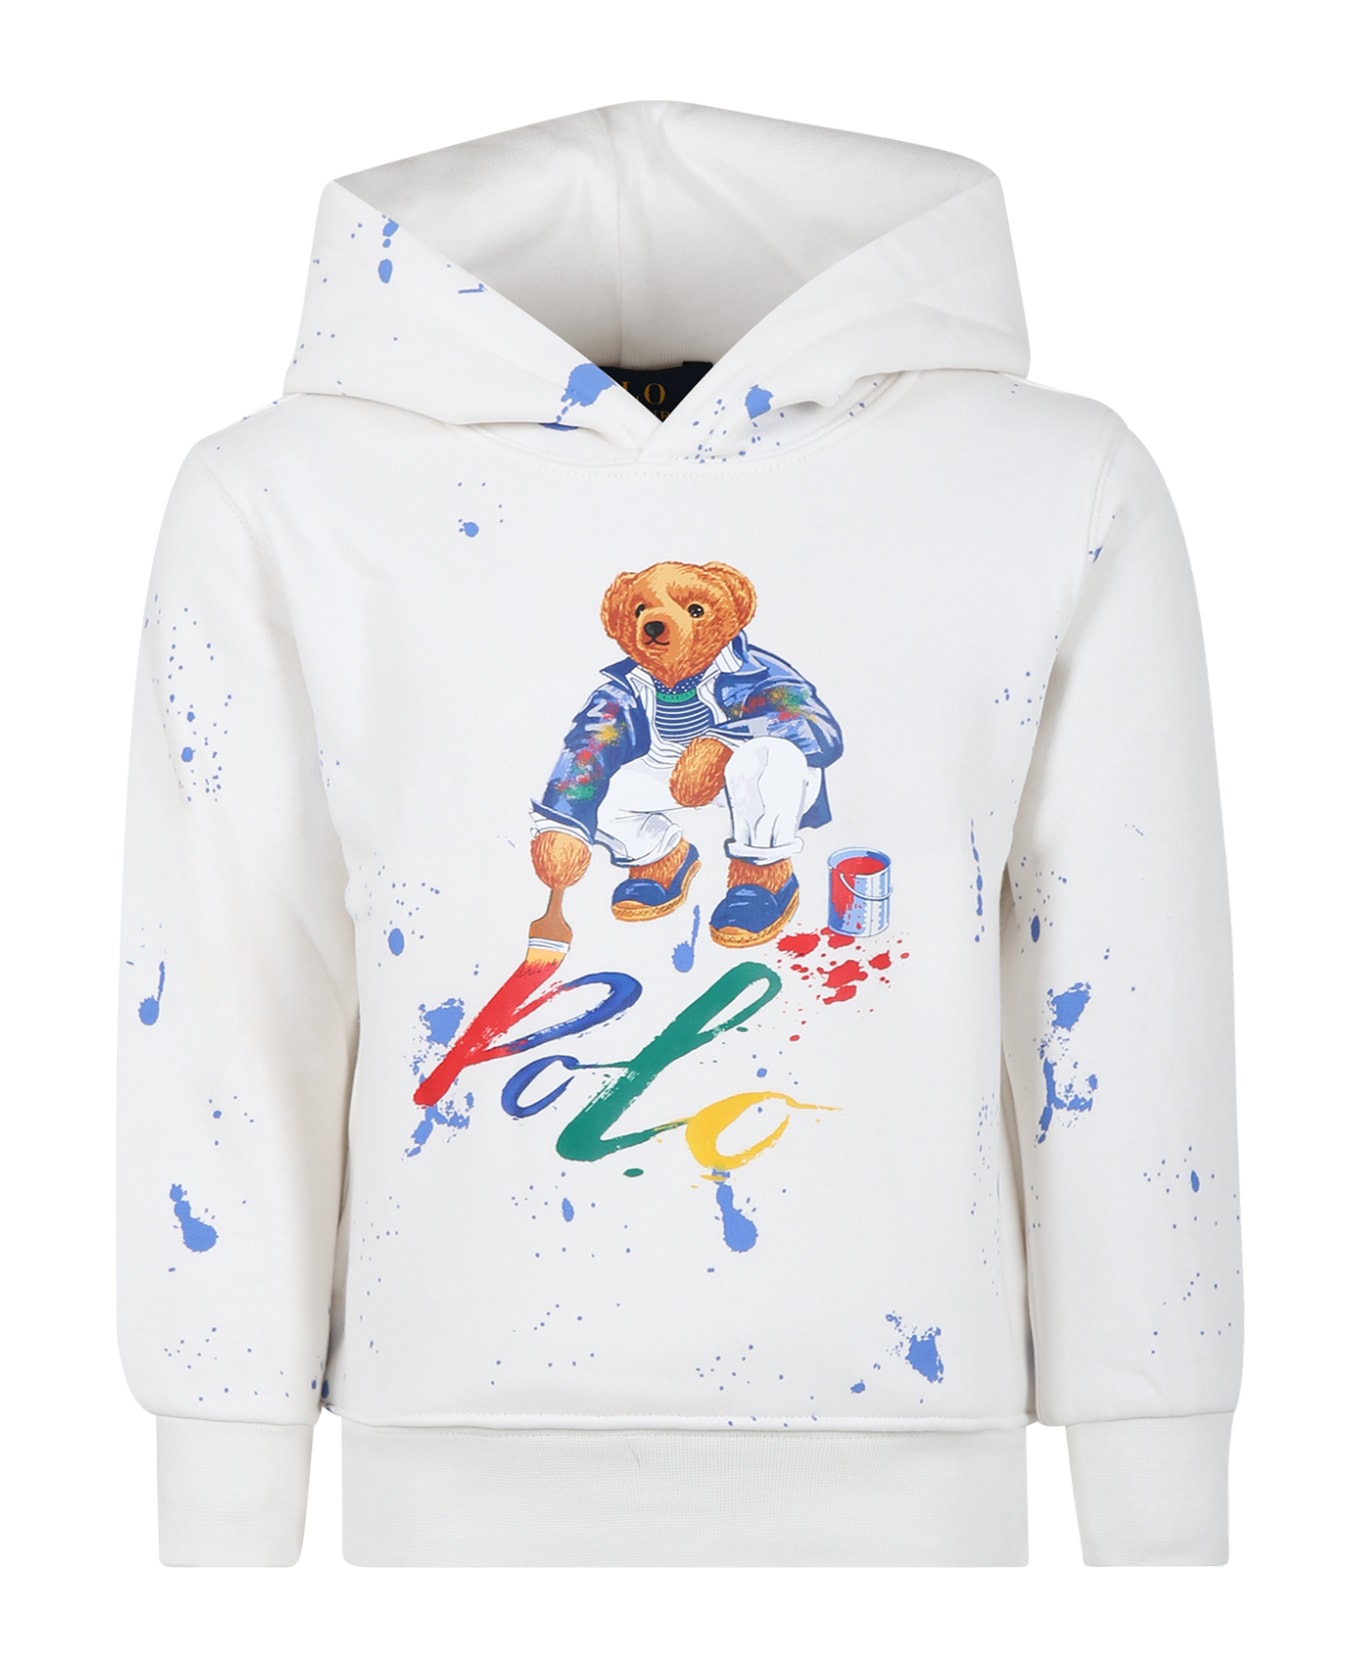 Ralph Lauren White Sweatshirt For Boy With Polo Bear - White